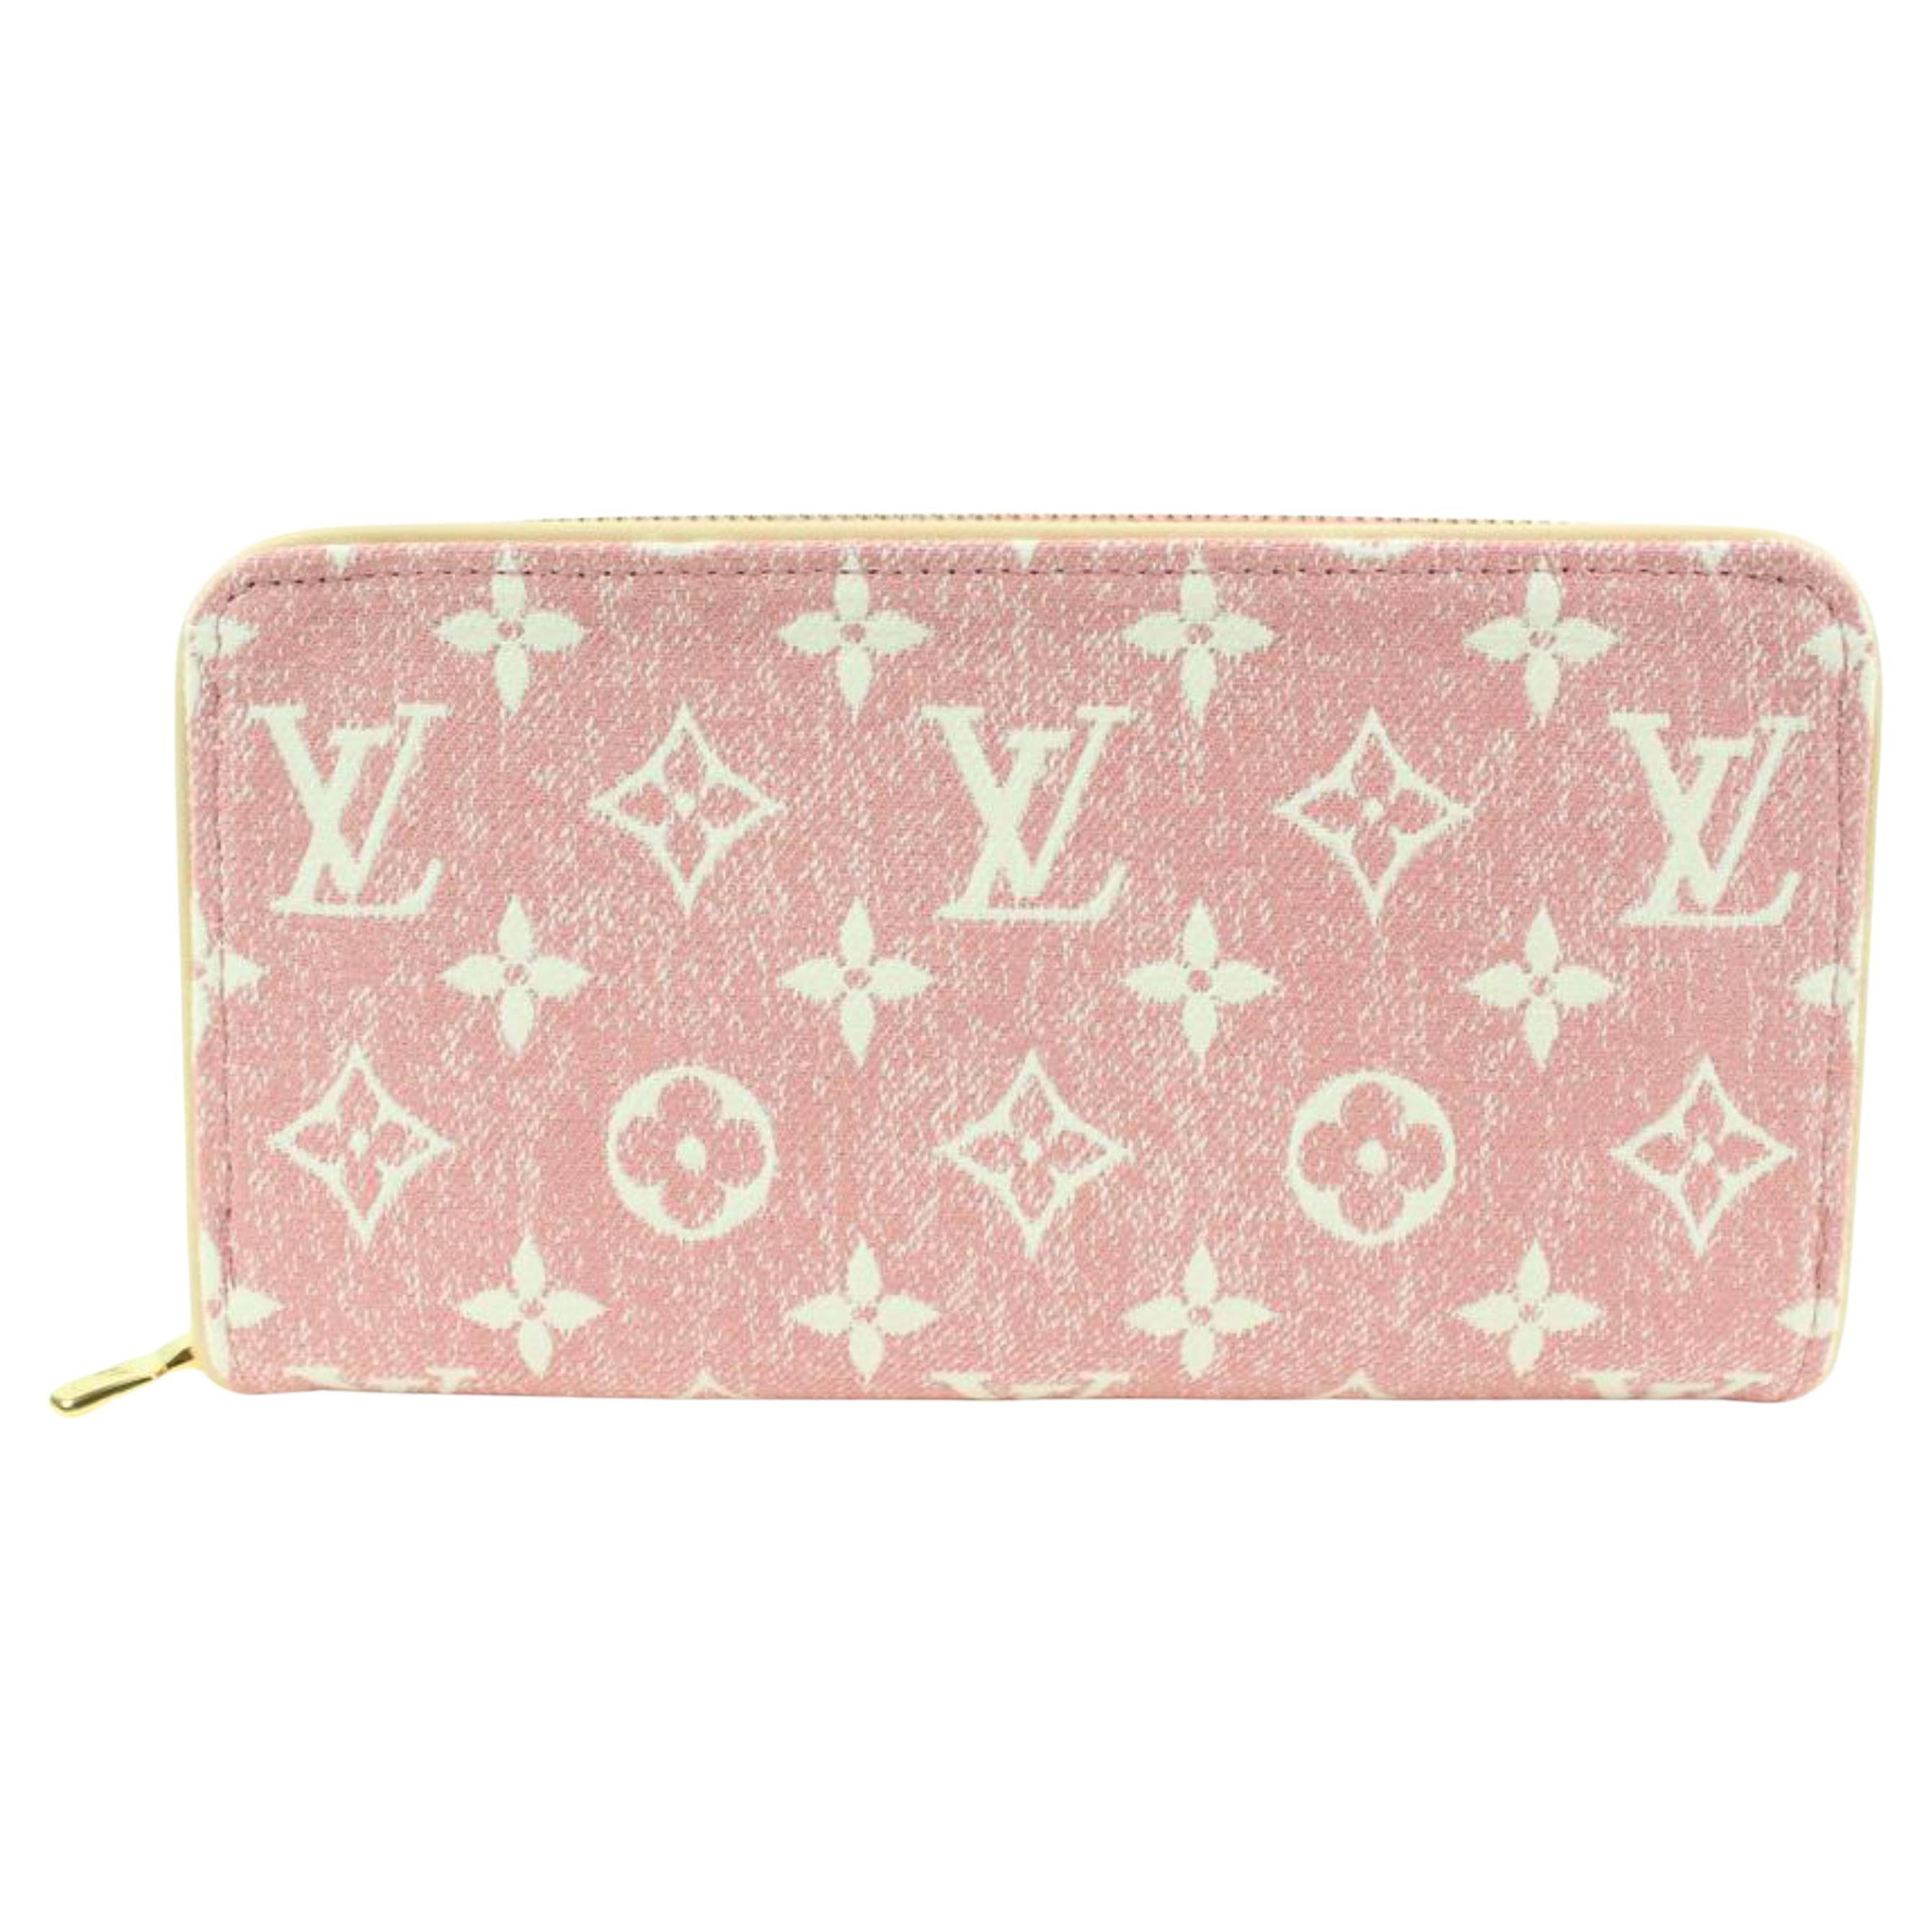 lv wallet pink